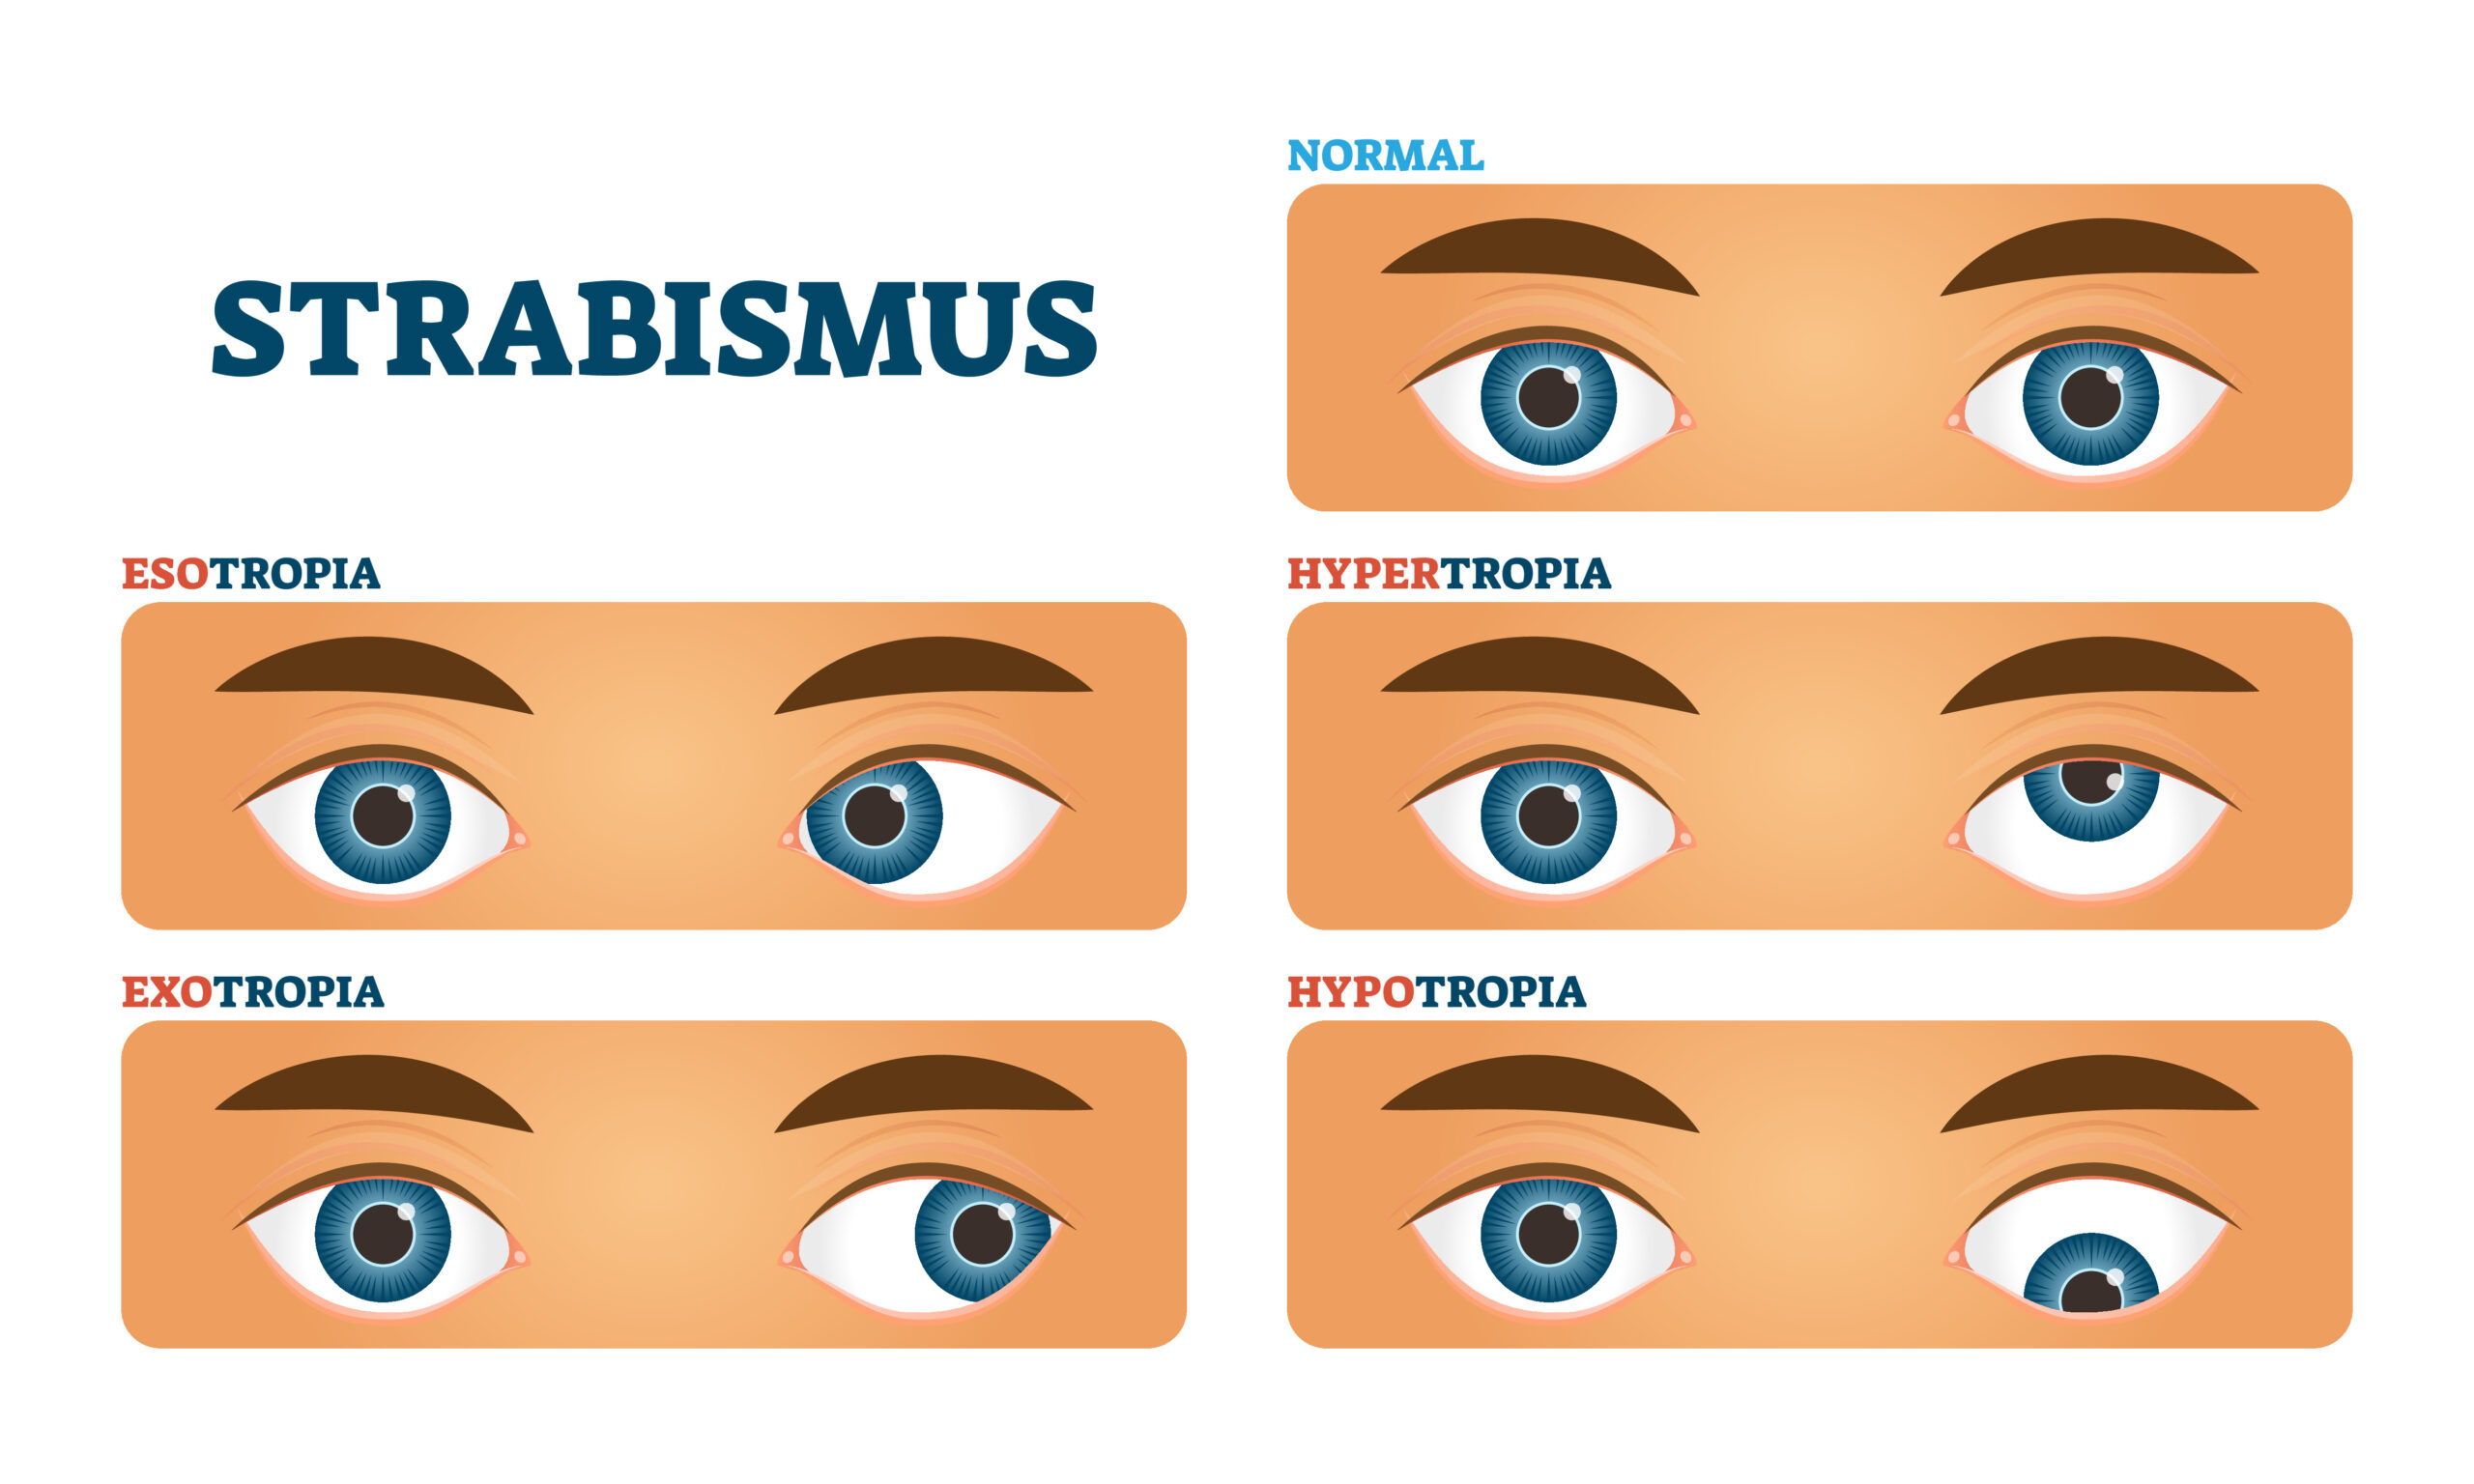 strabism oftalmologic